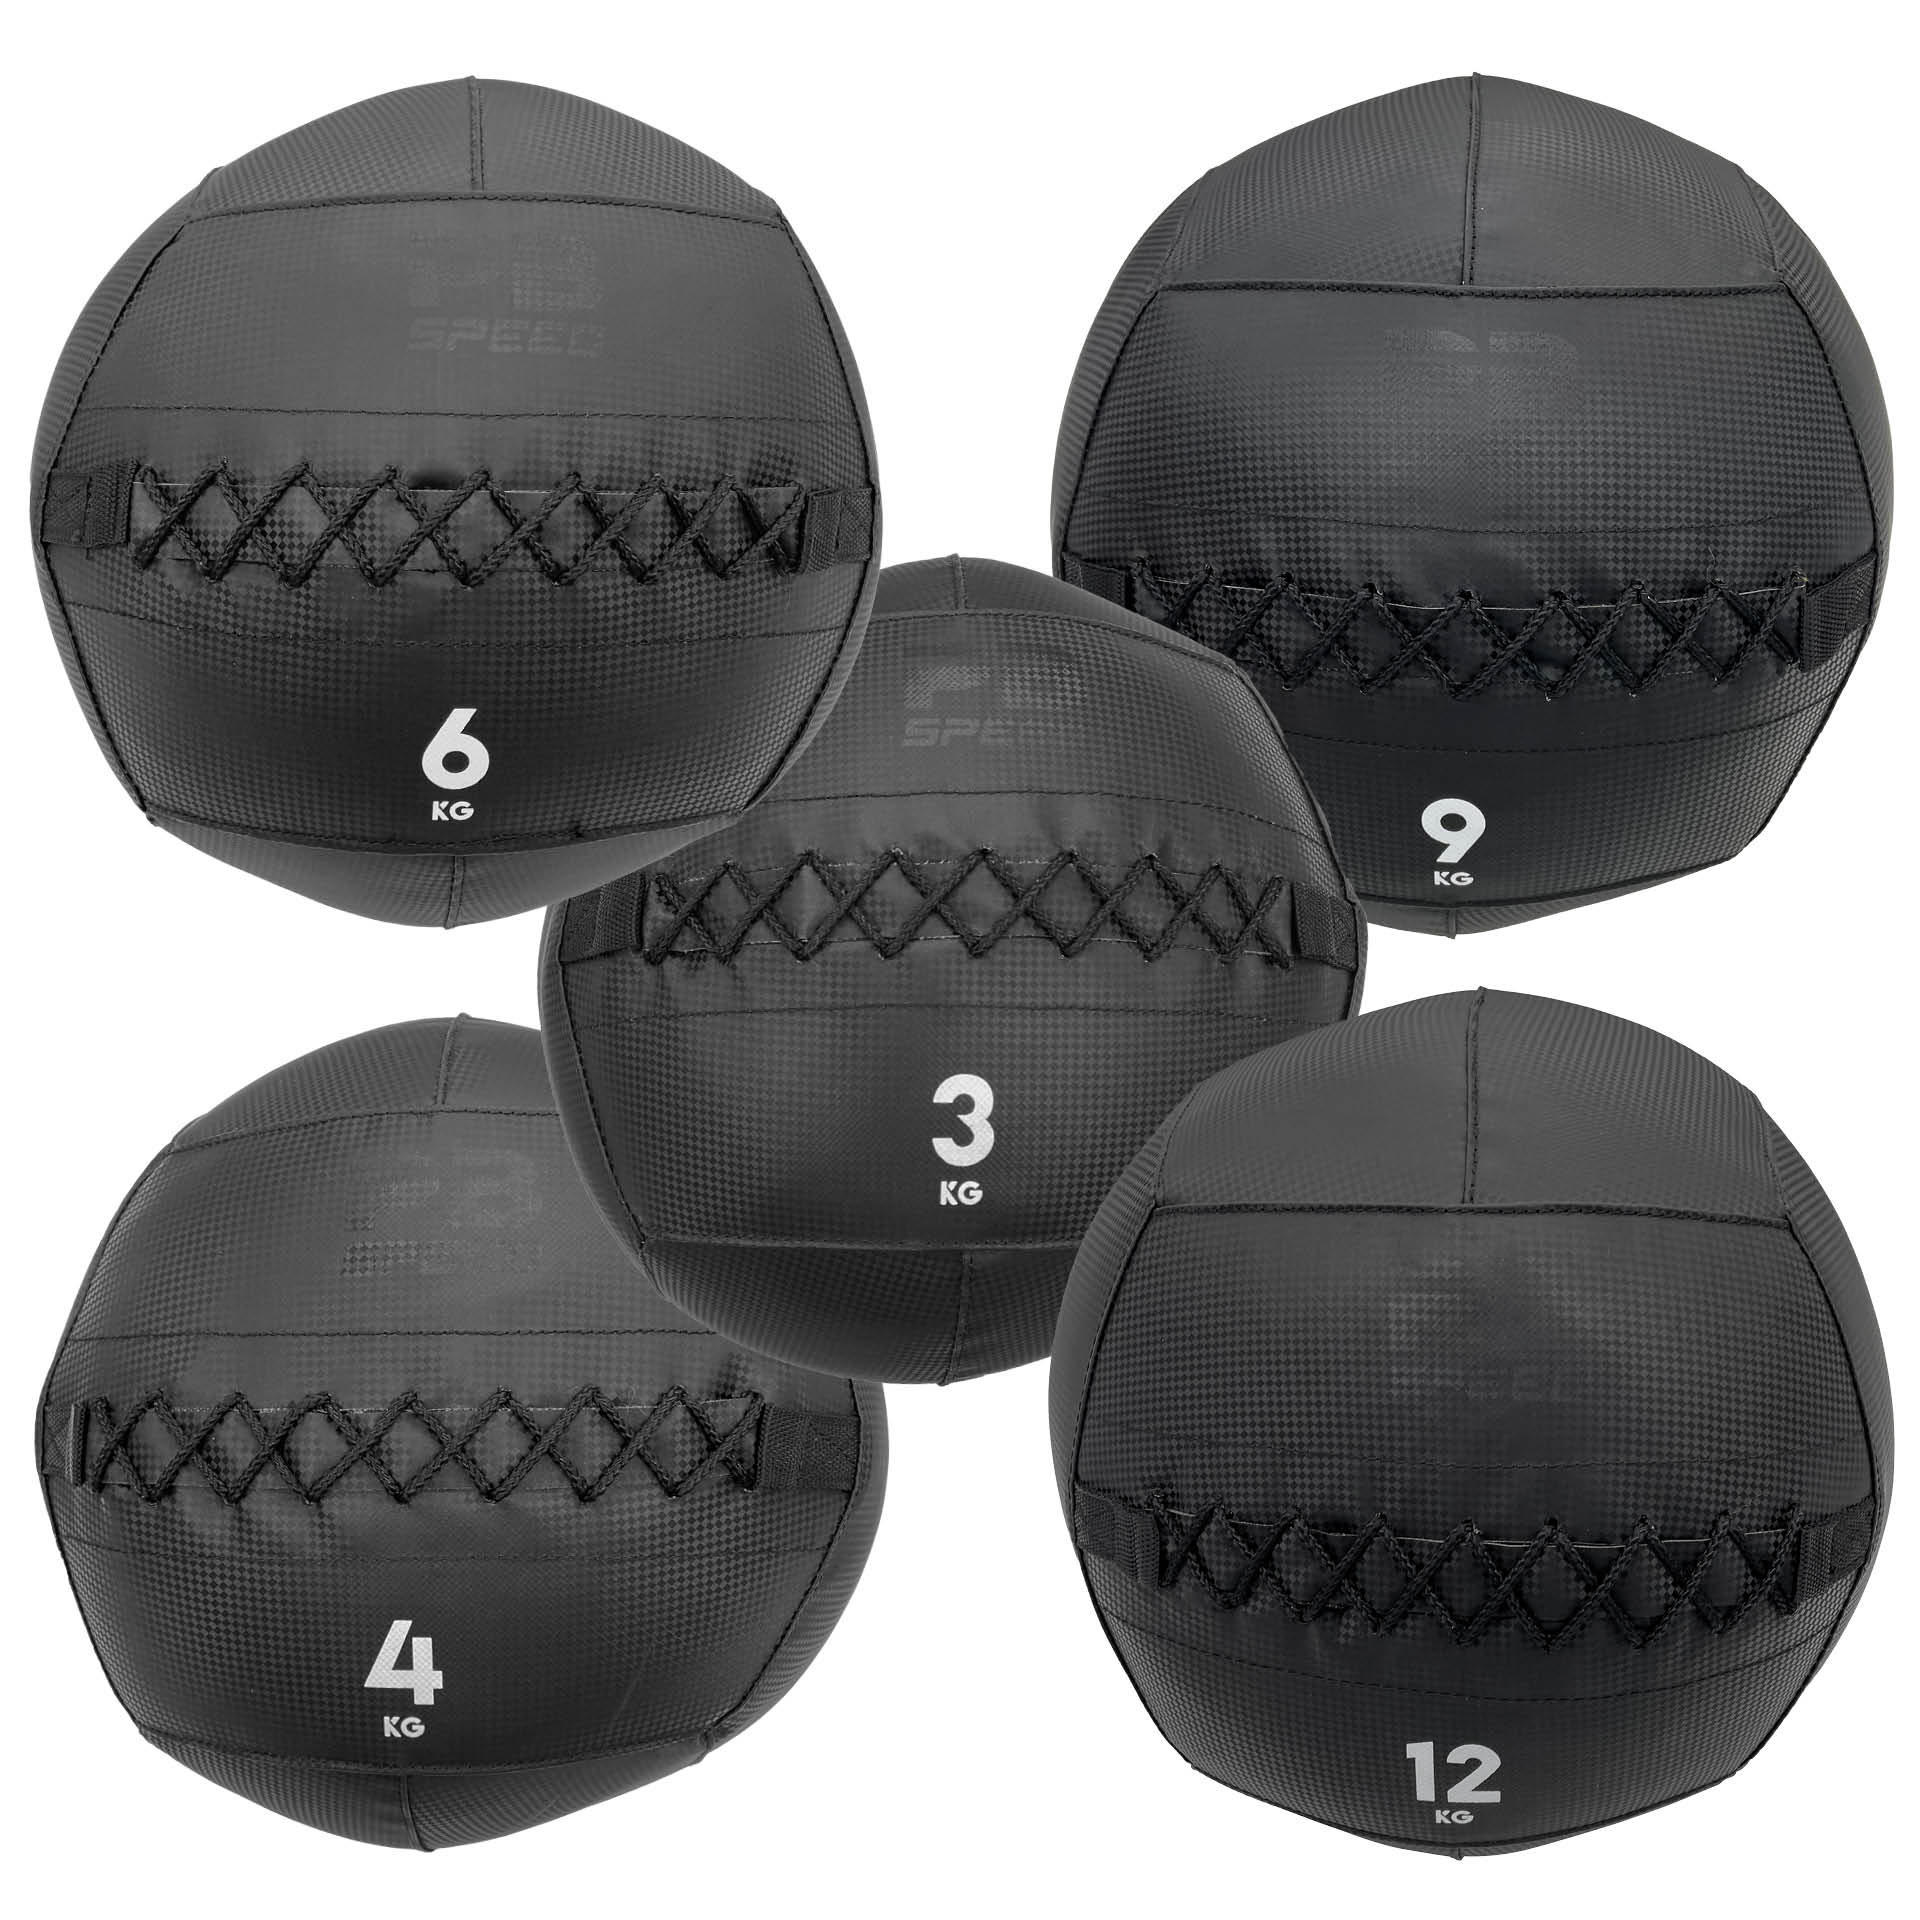 PB Speed Soft Medizinball 3-12 kg (Set)